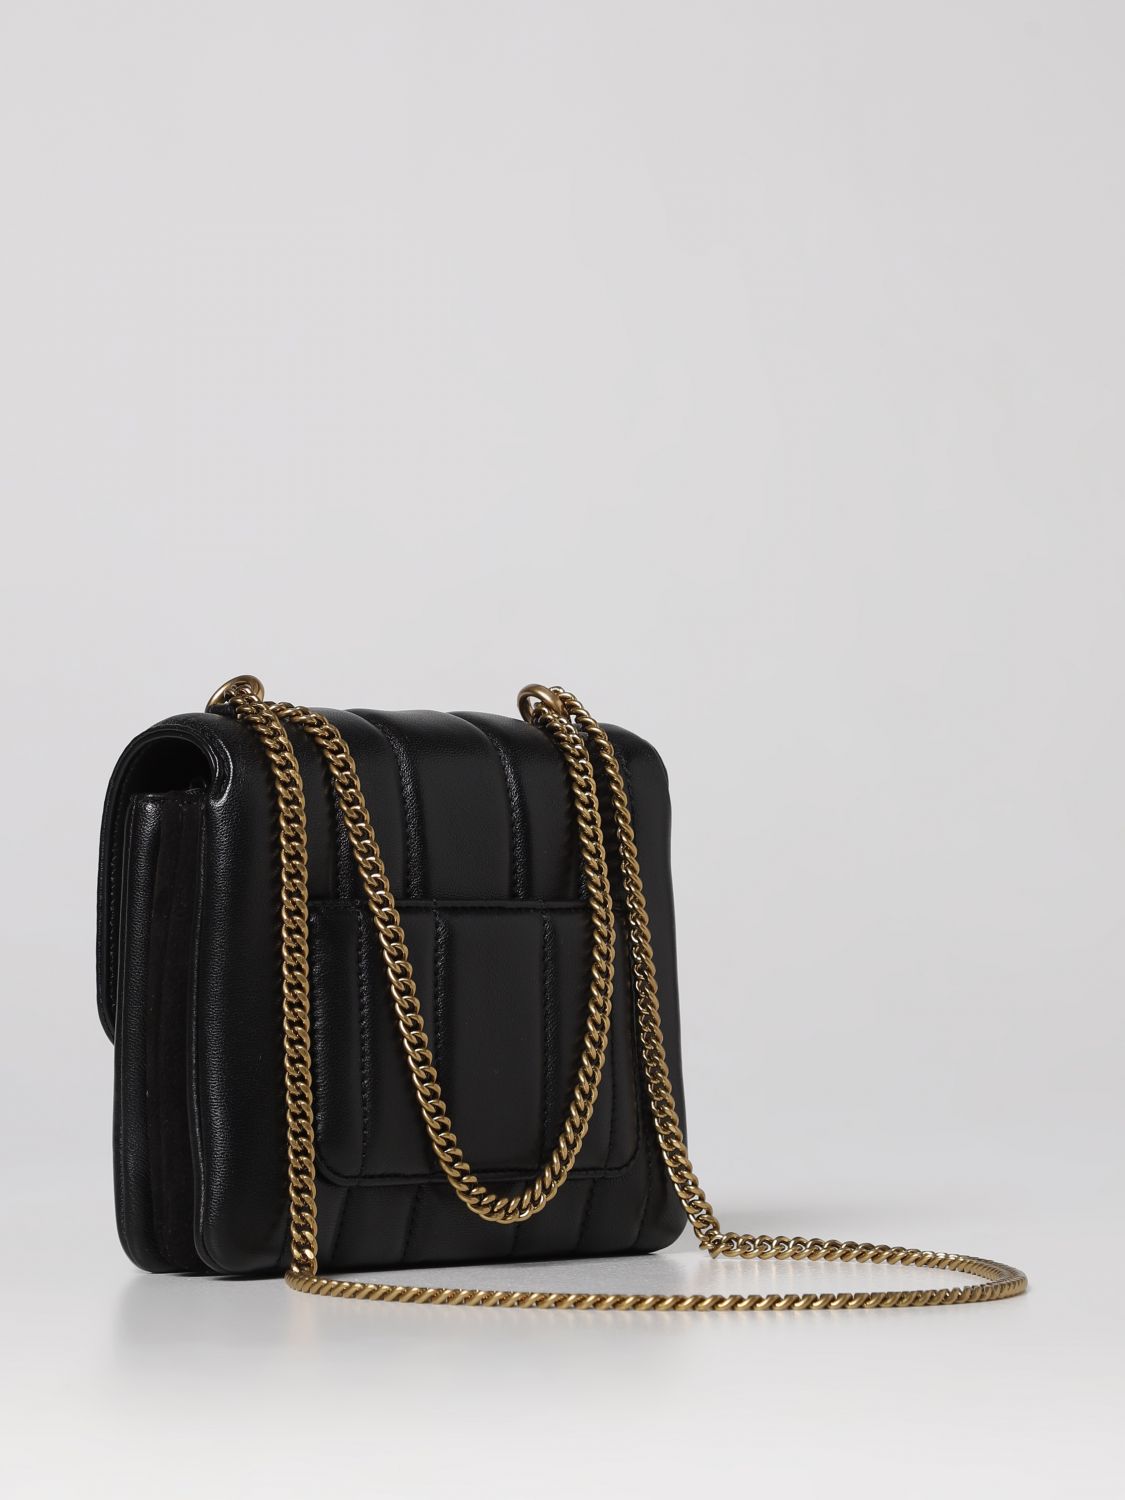 Tory Burch Outlet: mini bag for woman - Black | Tory Burch mini bag 137139  online on 